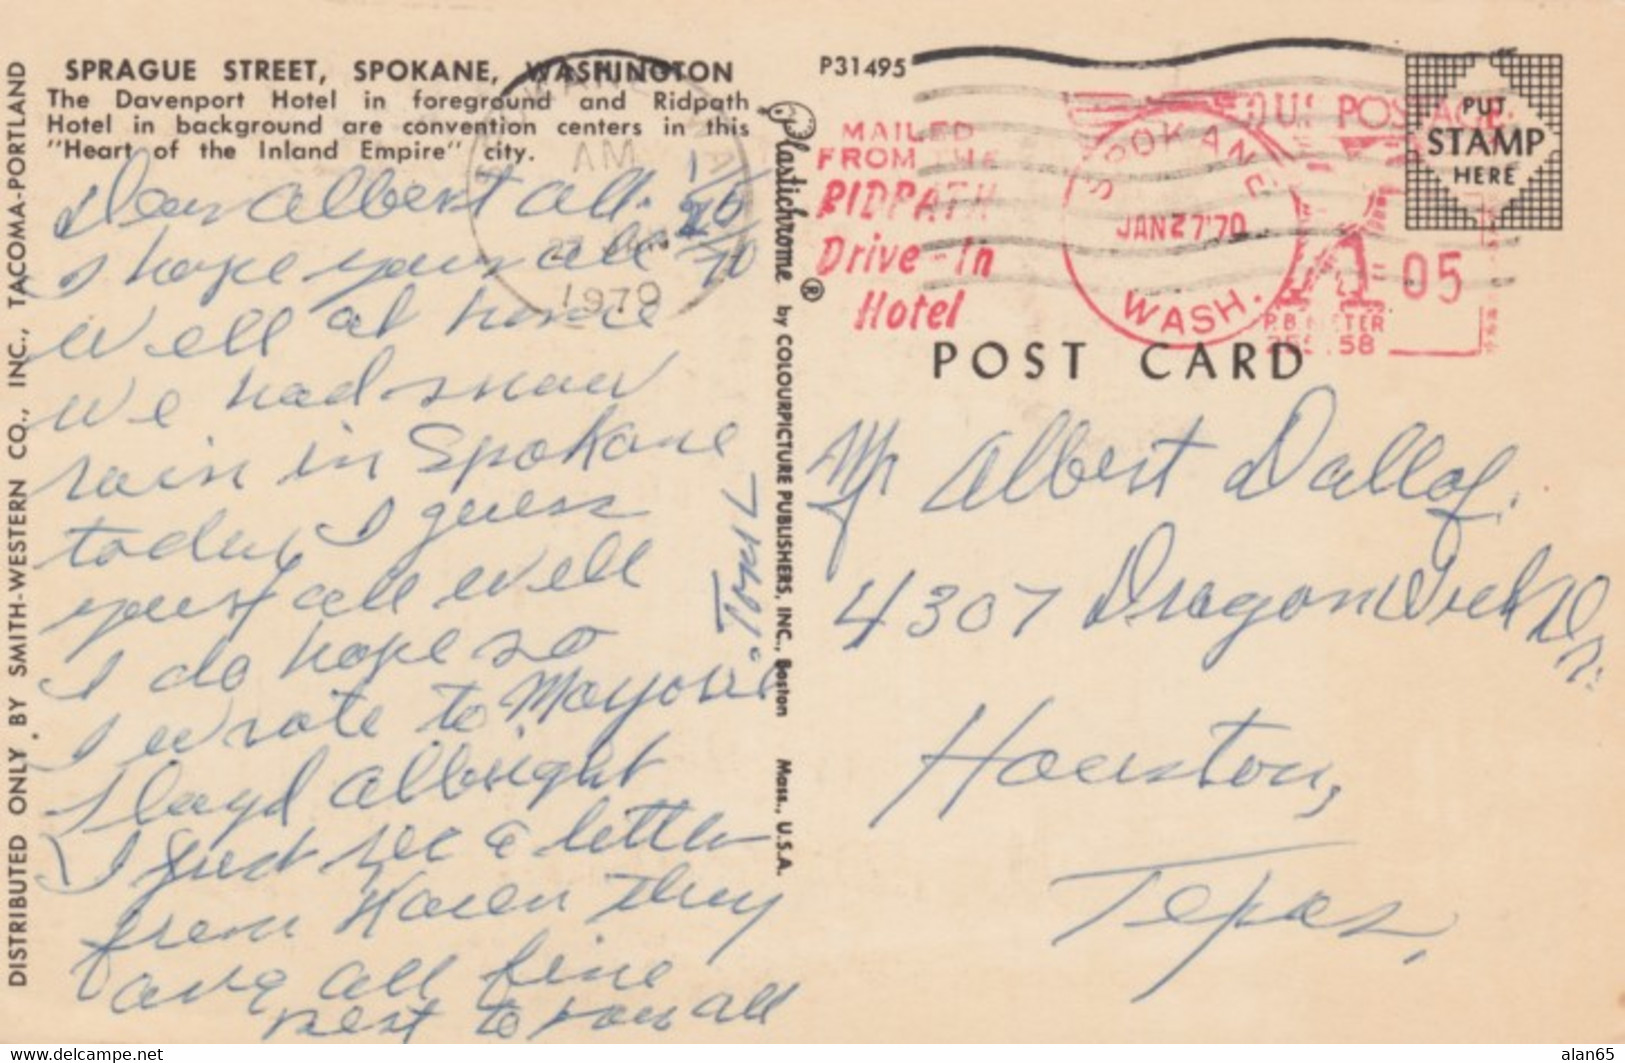 Spokane Washington, Sprague Street Scene At Night, Autos, Business Signs, C1960s Vintage Postcard - Spokane